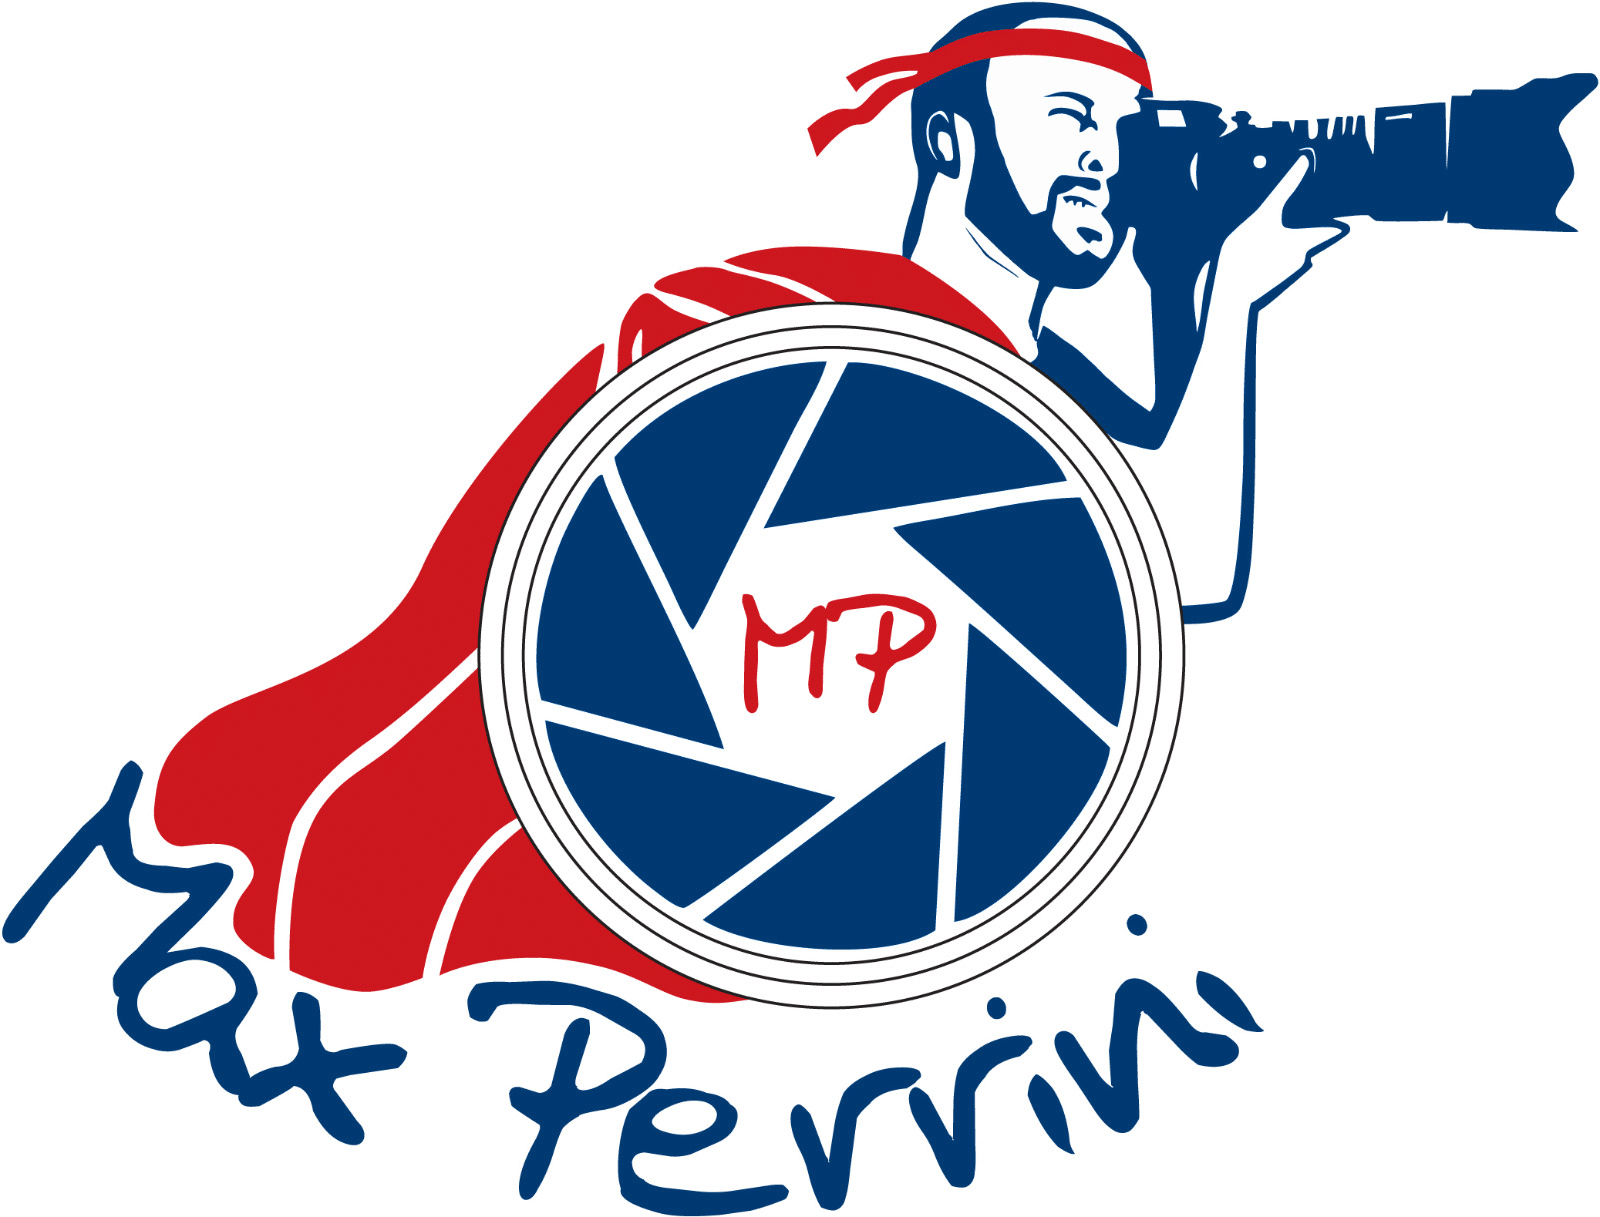 Max Perrini – Max Perrini